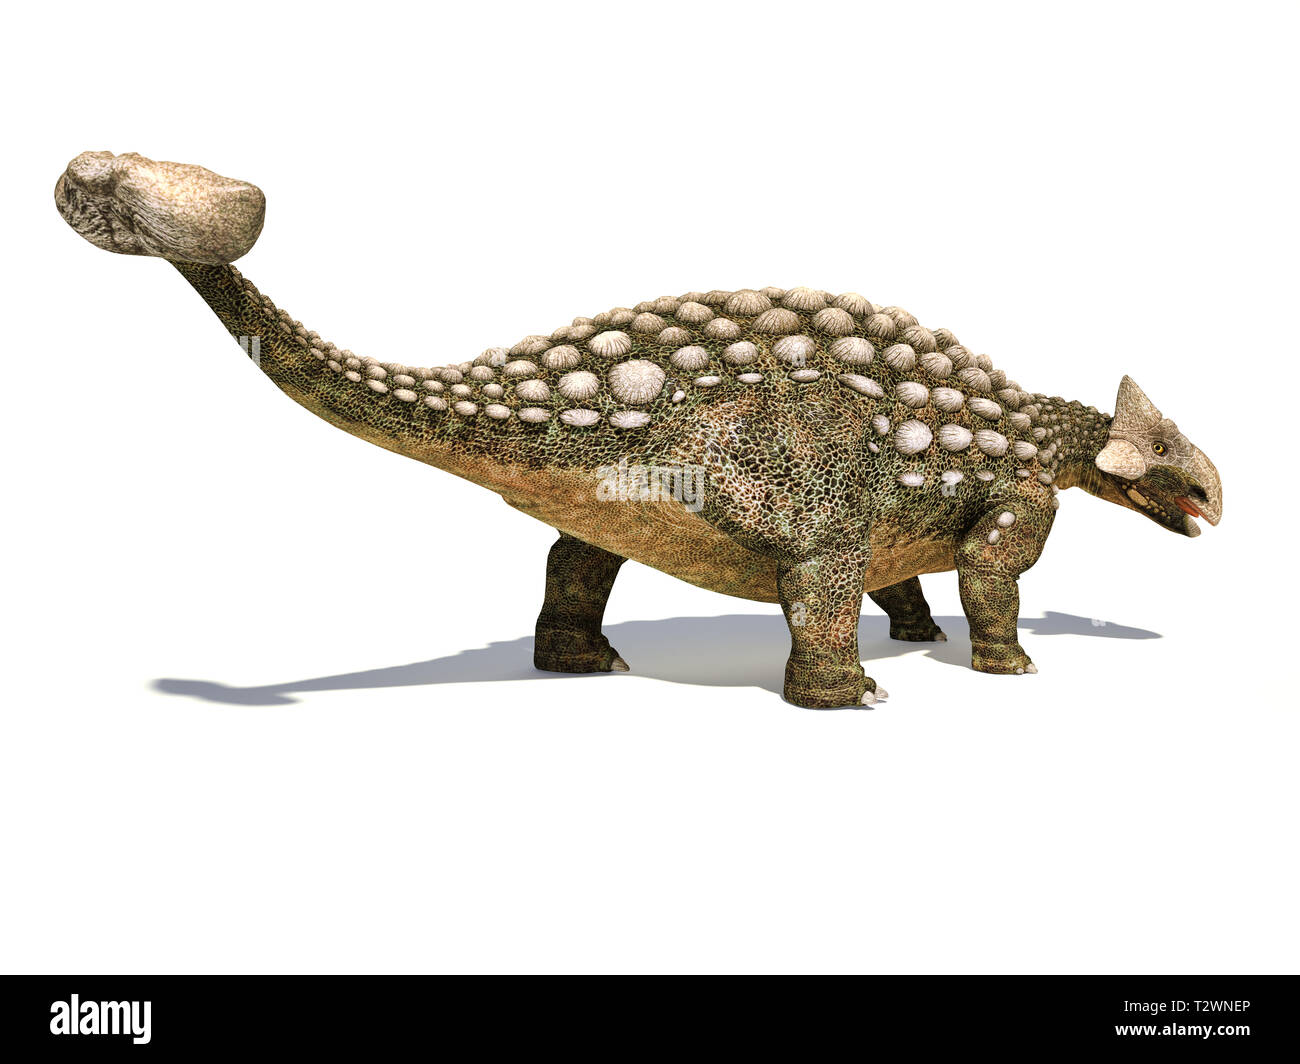 Ankylosaurus dinosaur isolated on white background with dropped shadow. Stock Photo